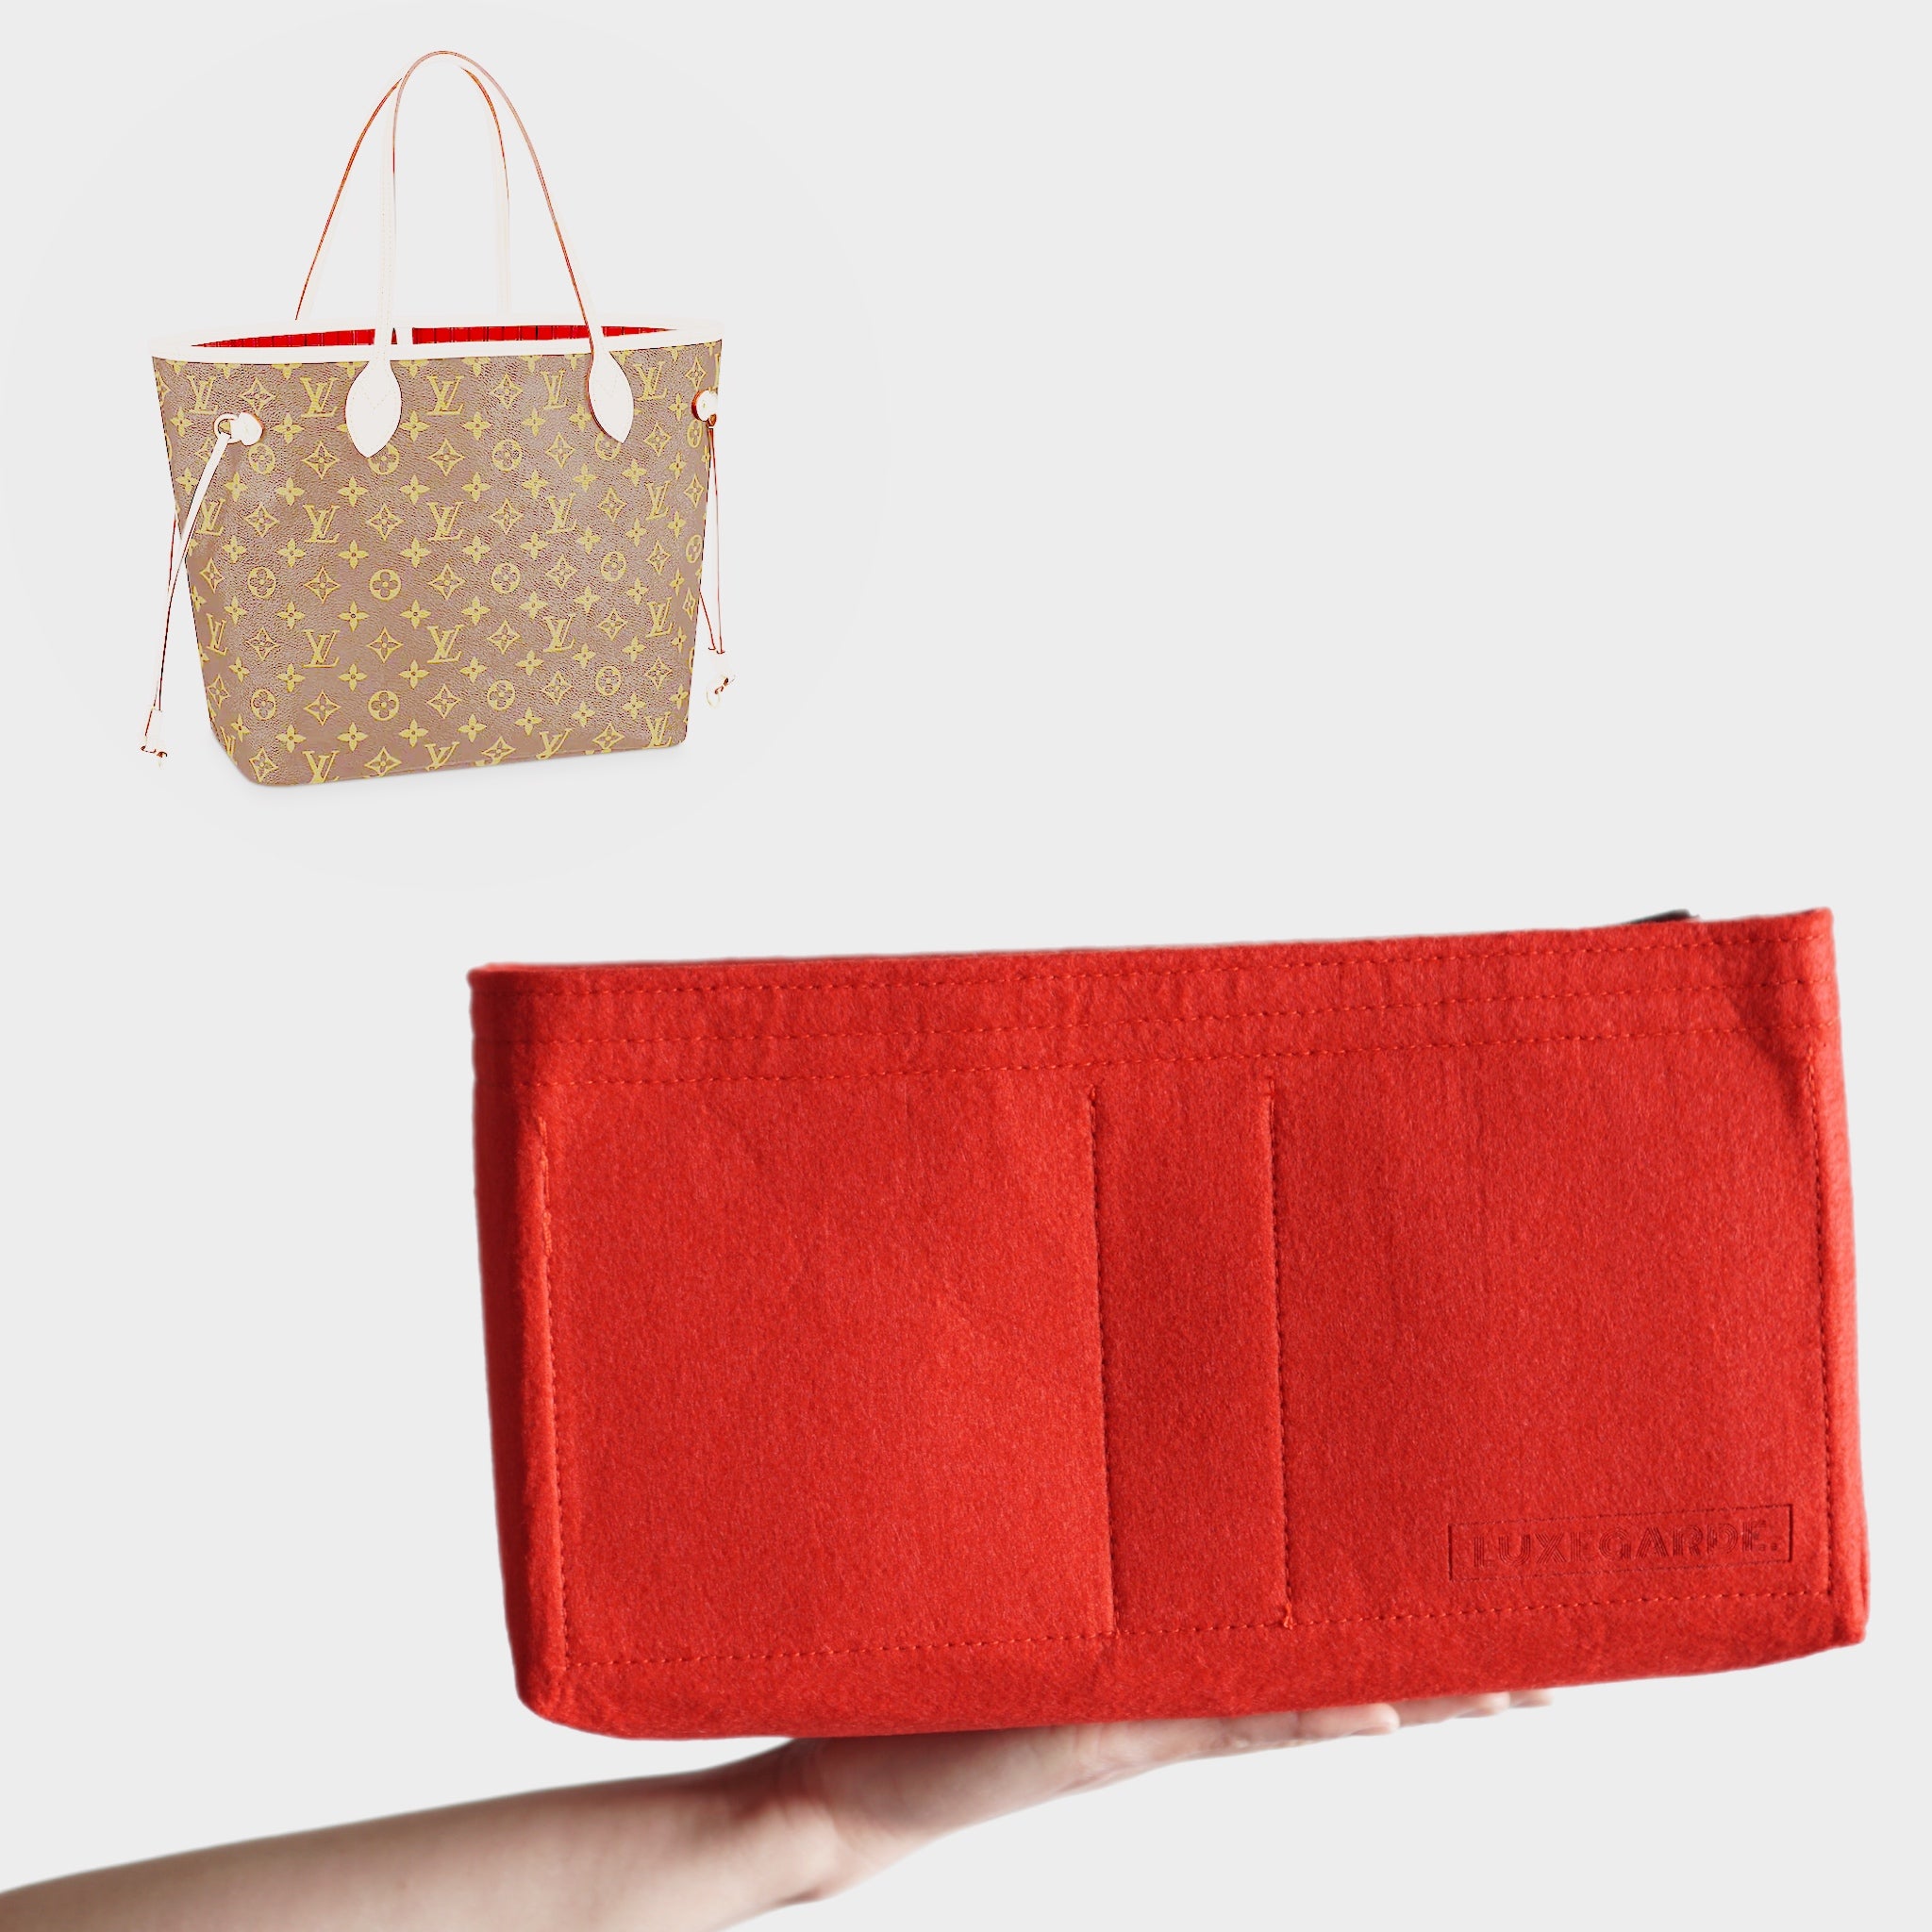 Bag Organizer Insert for Louis Vuitton Alma BB – Luxegarde